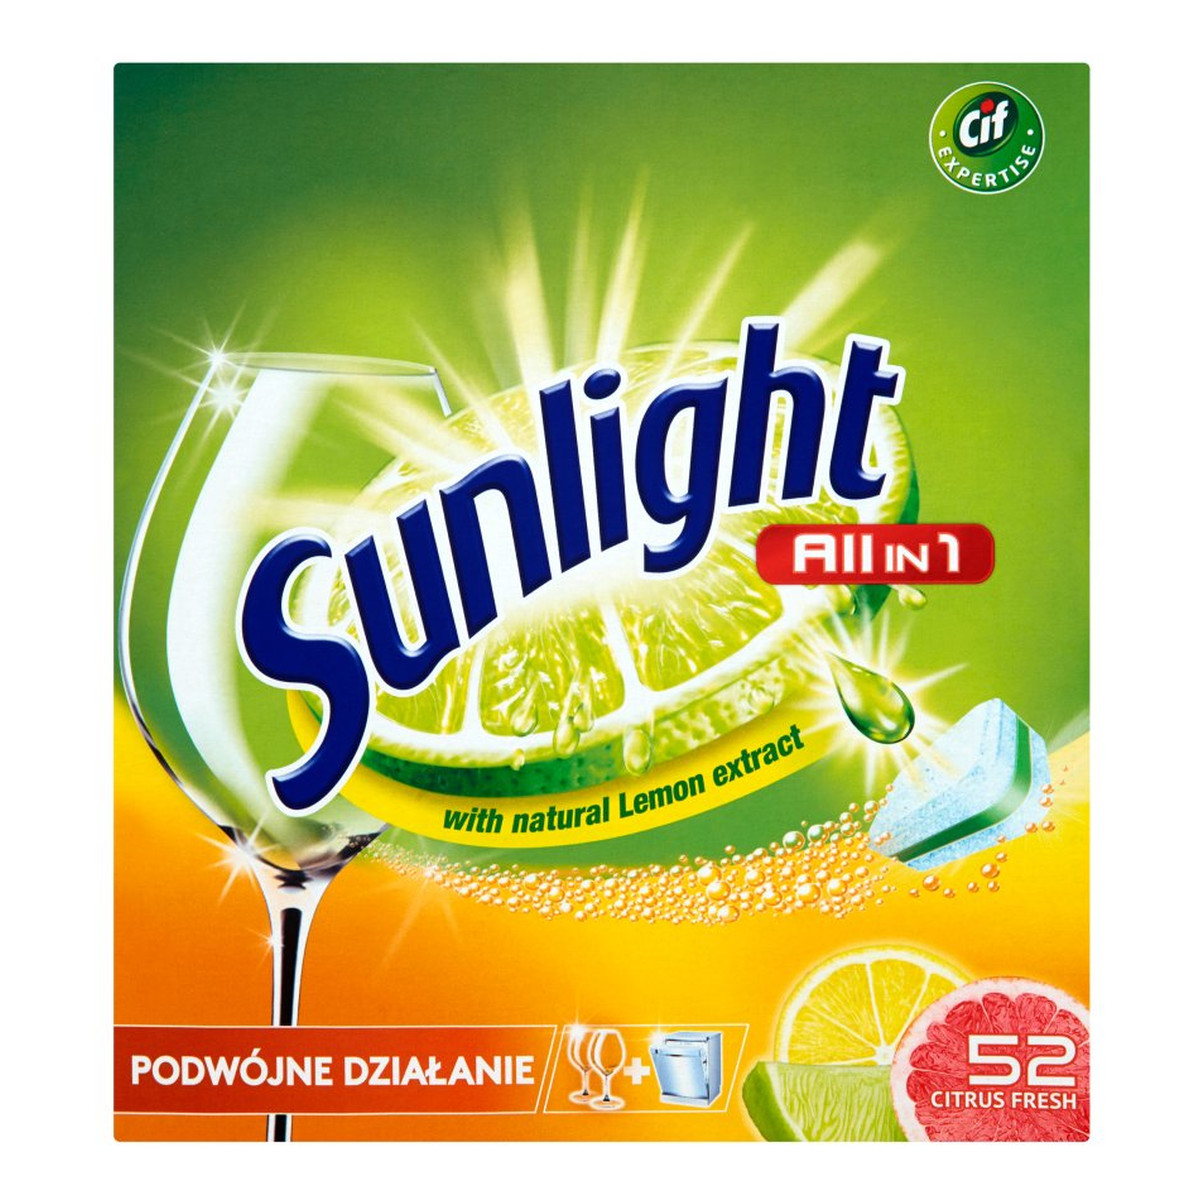 Sunlight All In 1 Double Action tabletki do mycia naczyń w zmywarkach Citrus Fresh 52szt 910g